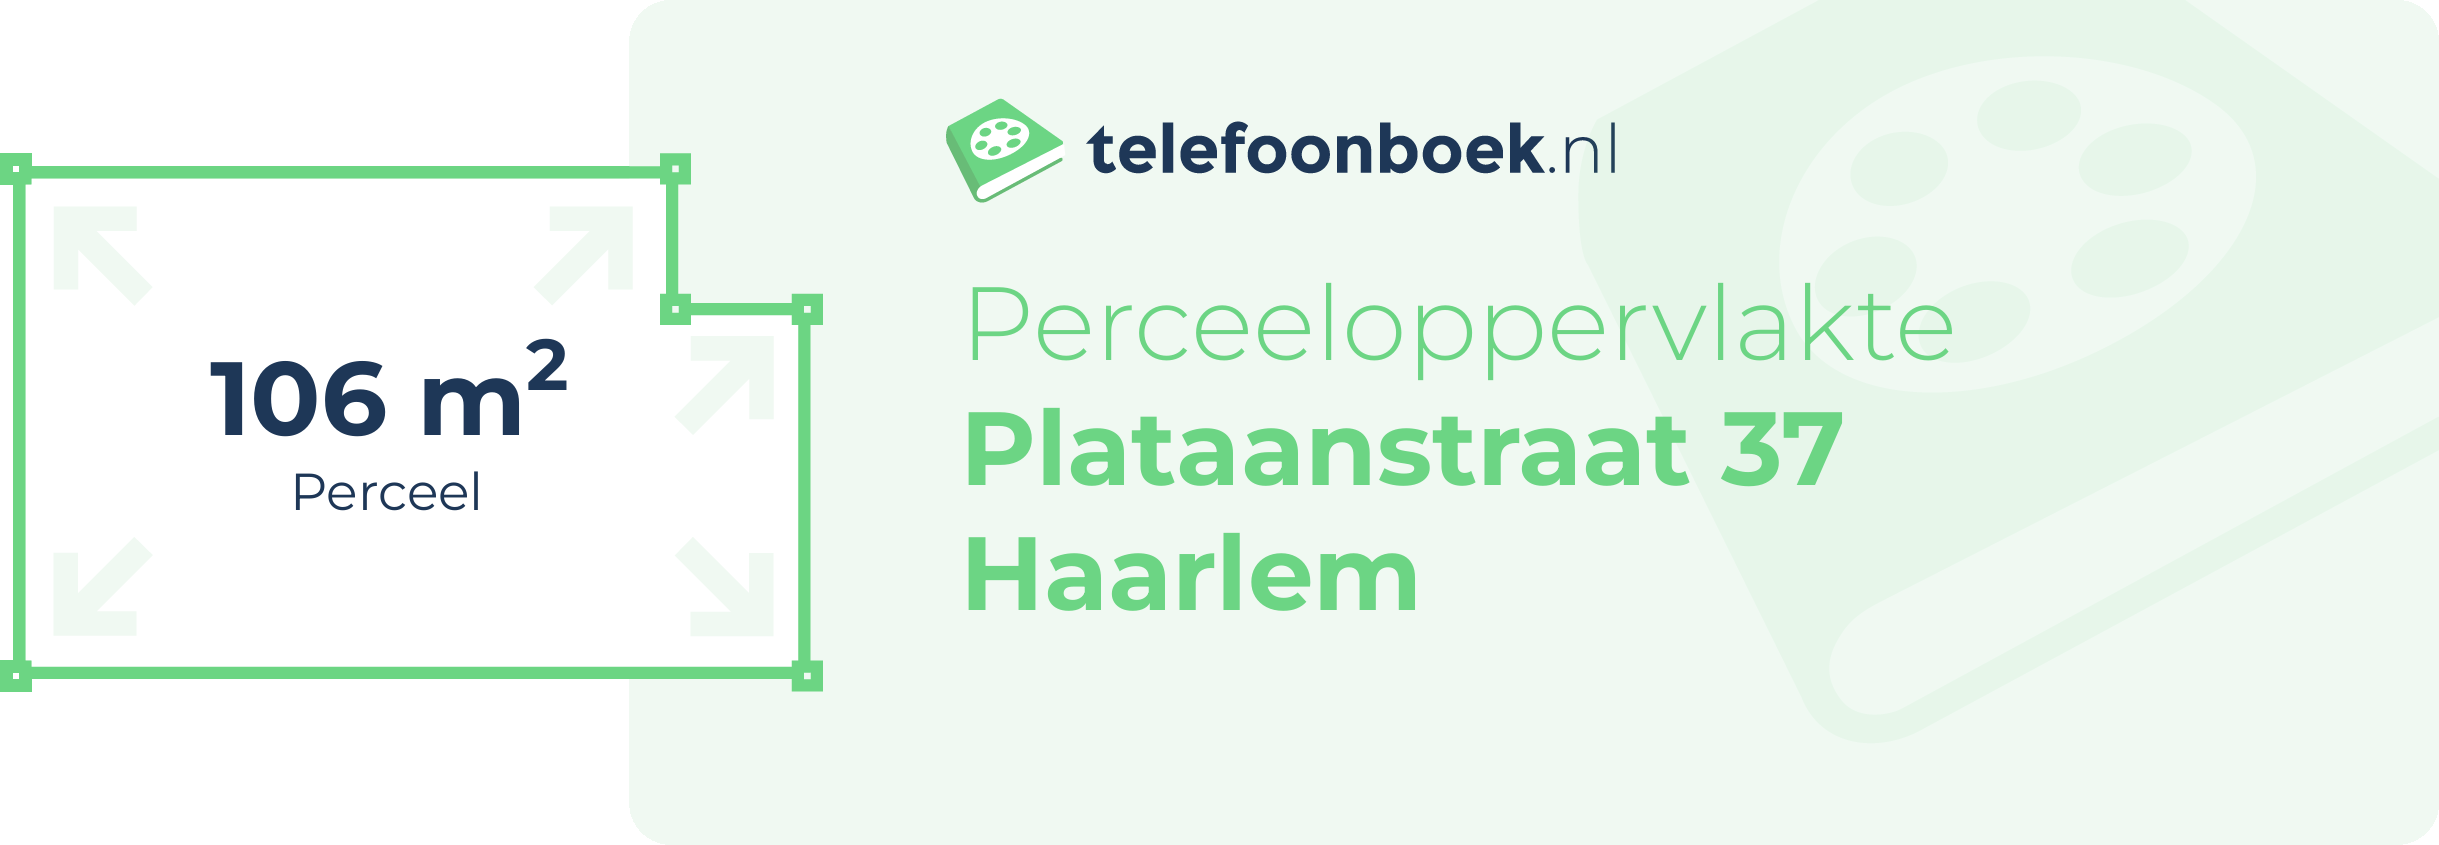 Perceeloppervlakte Plataanstraat 37 Haarlem